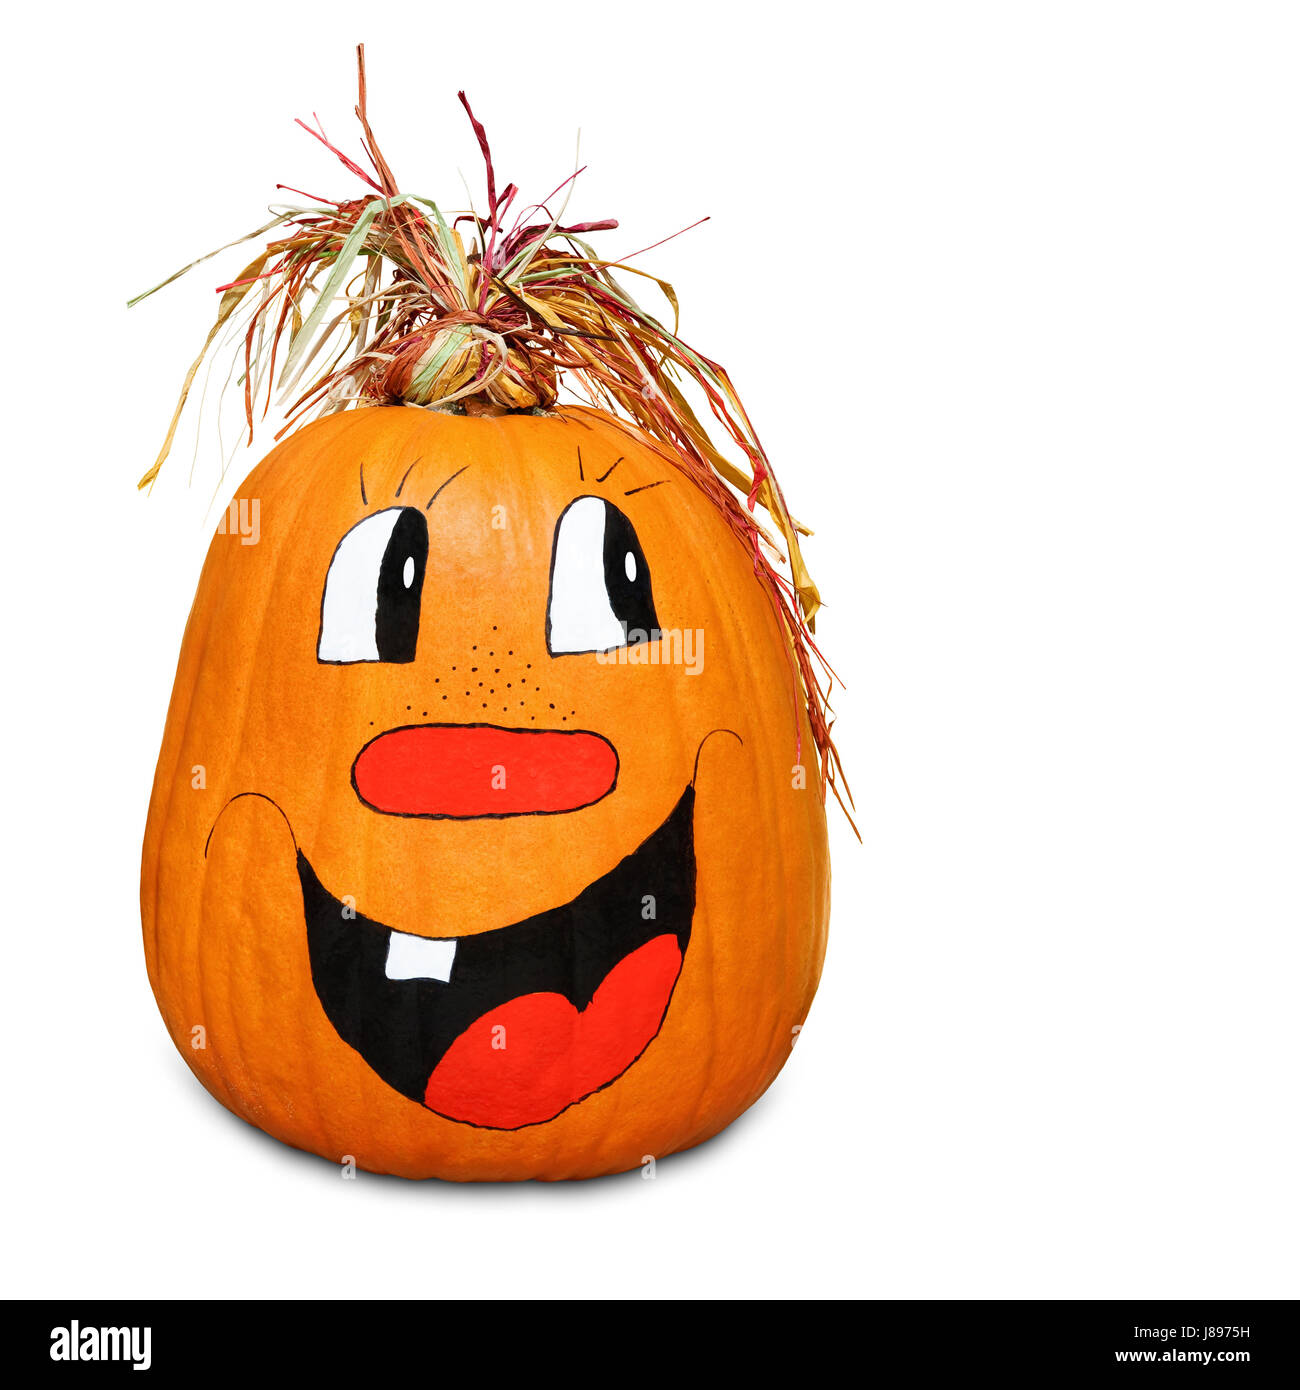 face, halloween, pumpkin, orange, apart, extra, insulated, fall, autumn, laugh, Stock Photo